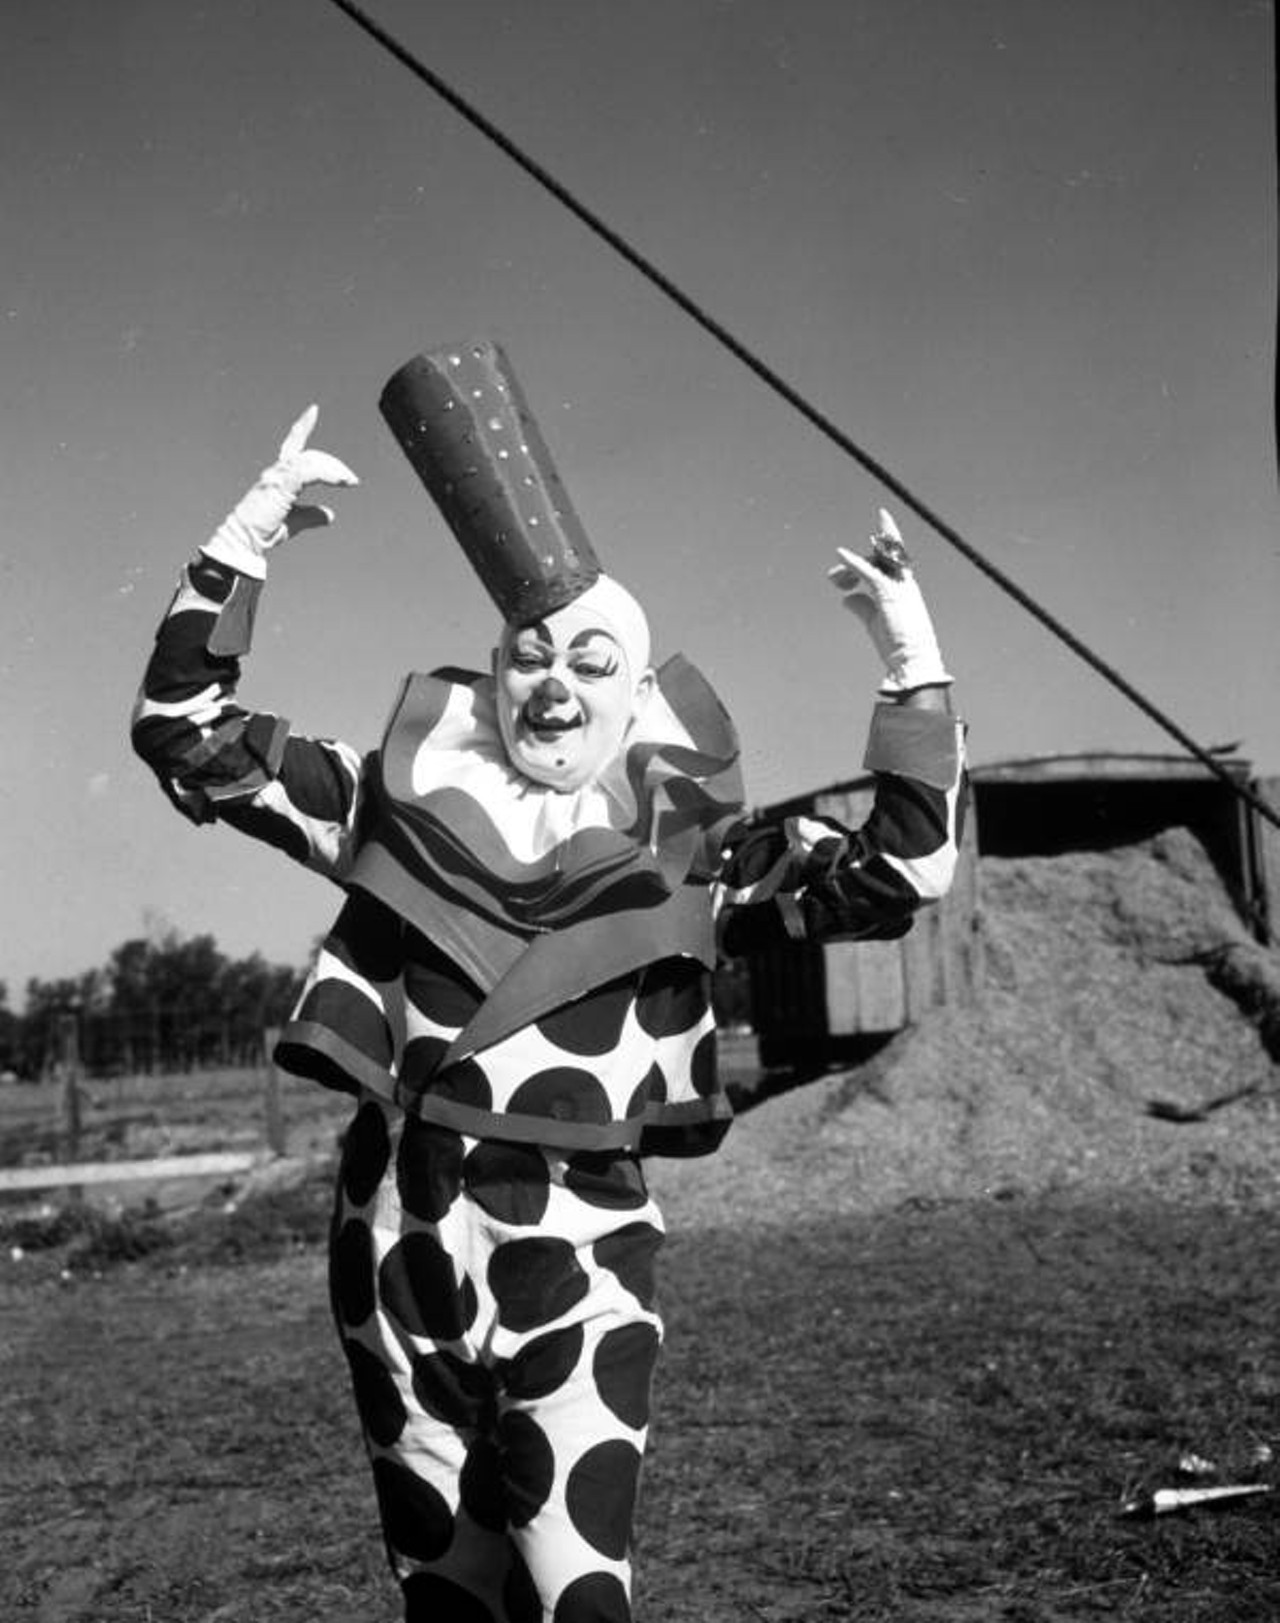 Clown Albert "Flo" White in Sarasota, 1940s (via floridamemory.com)